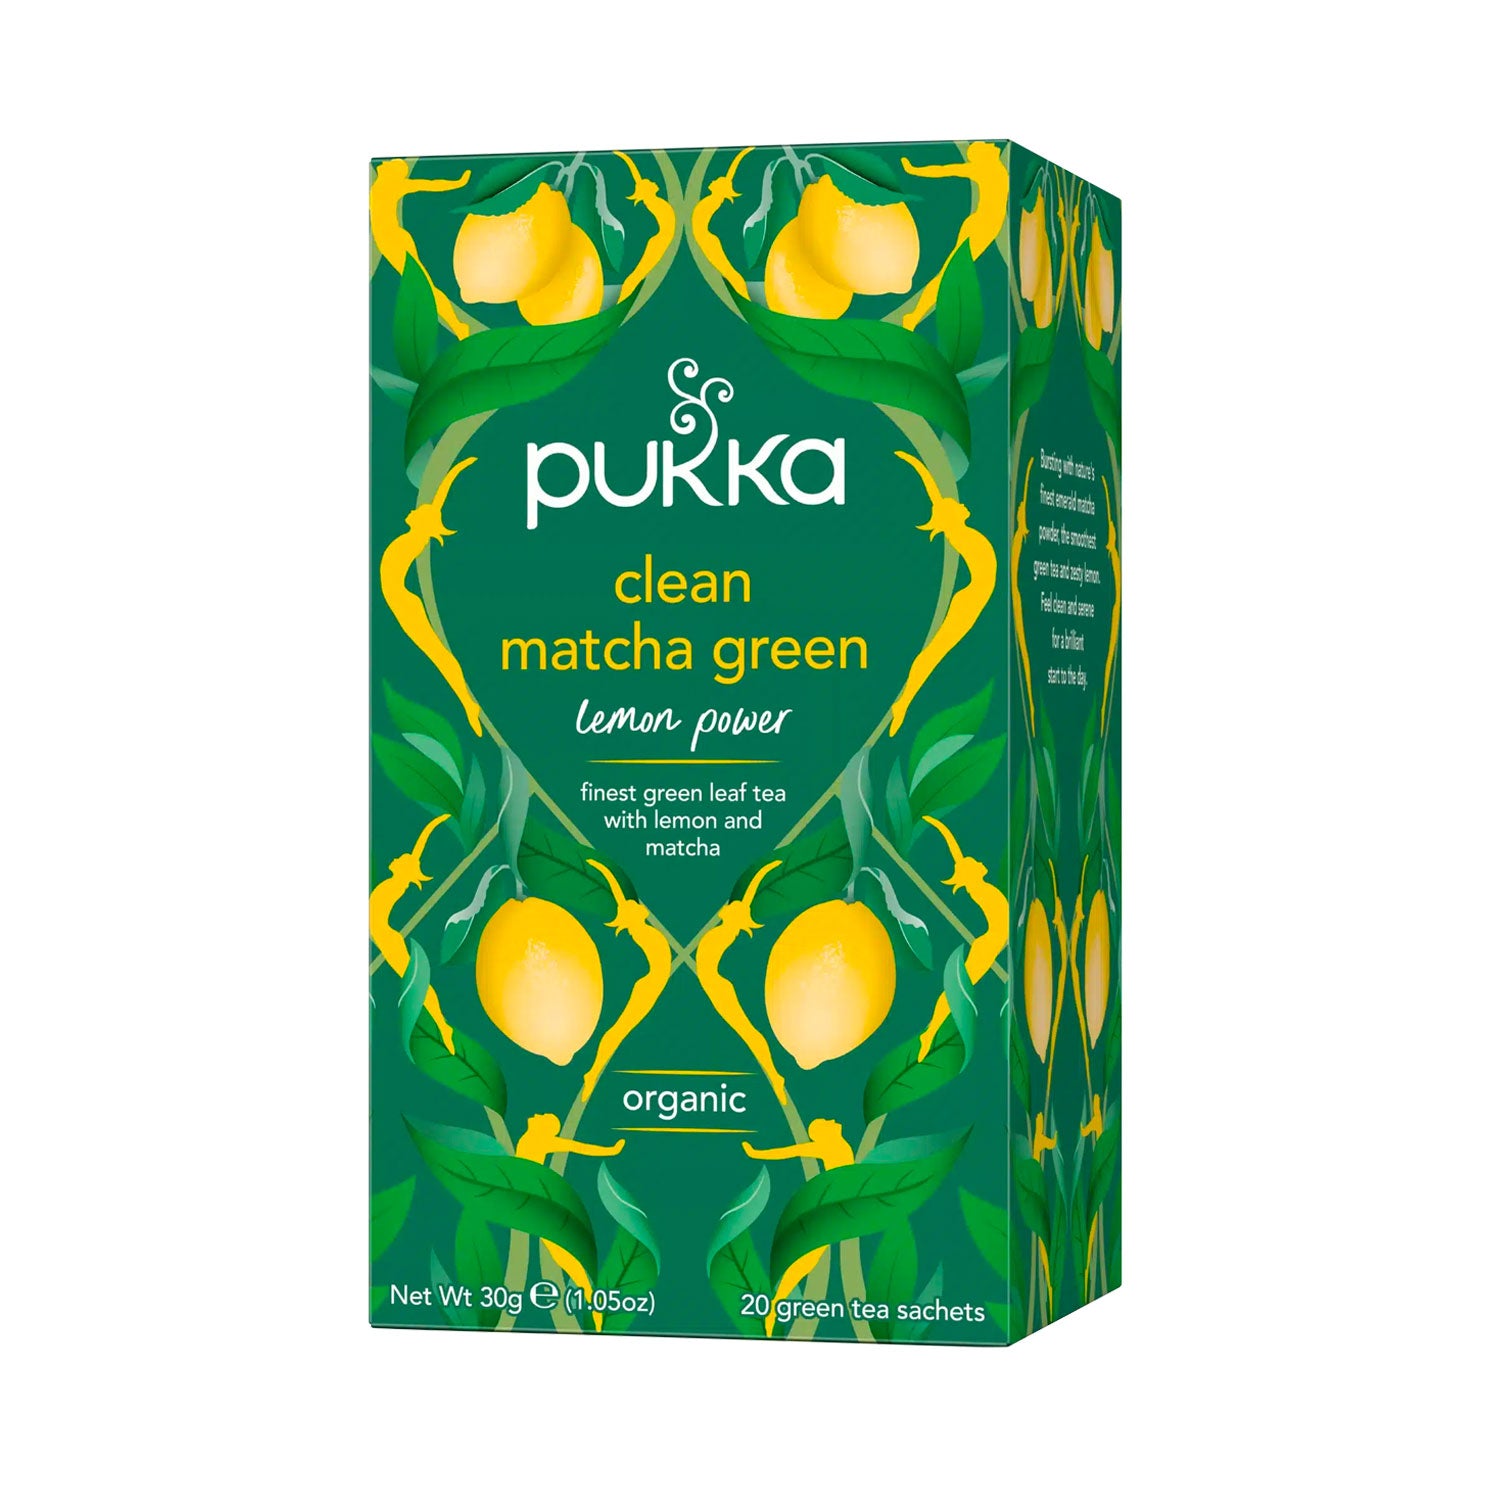 Se Pukka Clean Matcha Green te organic - 20 stk - brev te hos Teago.dk